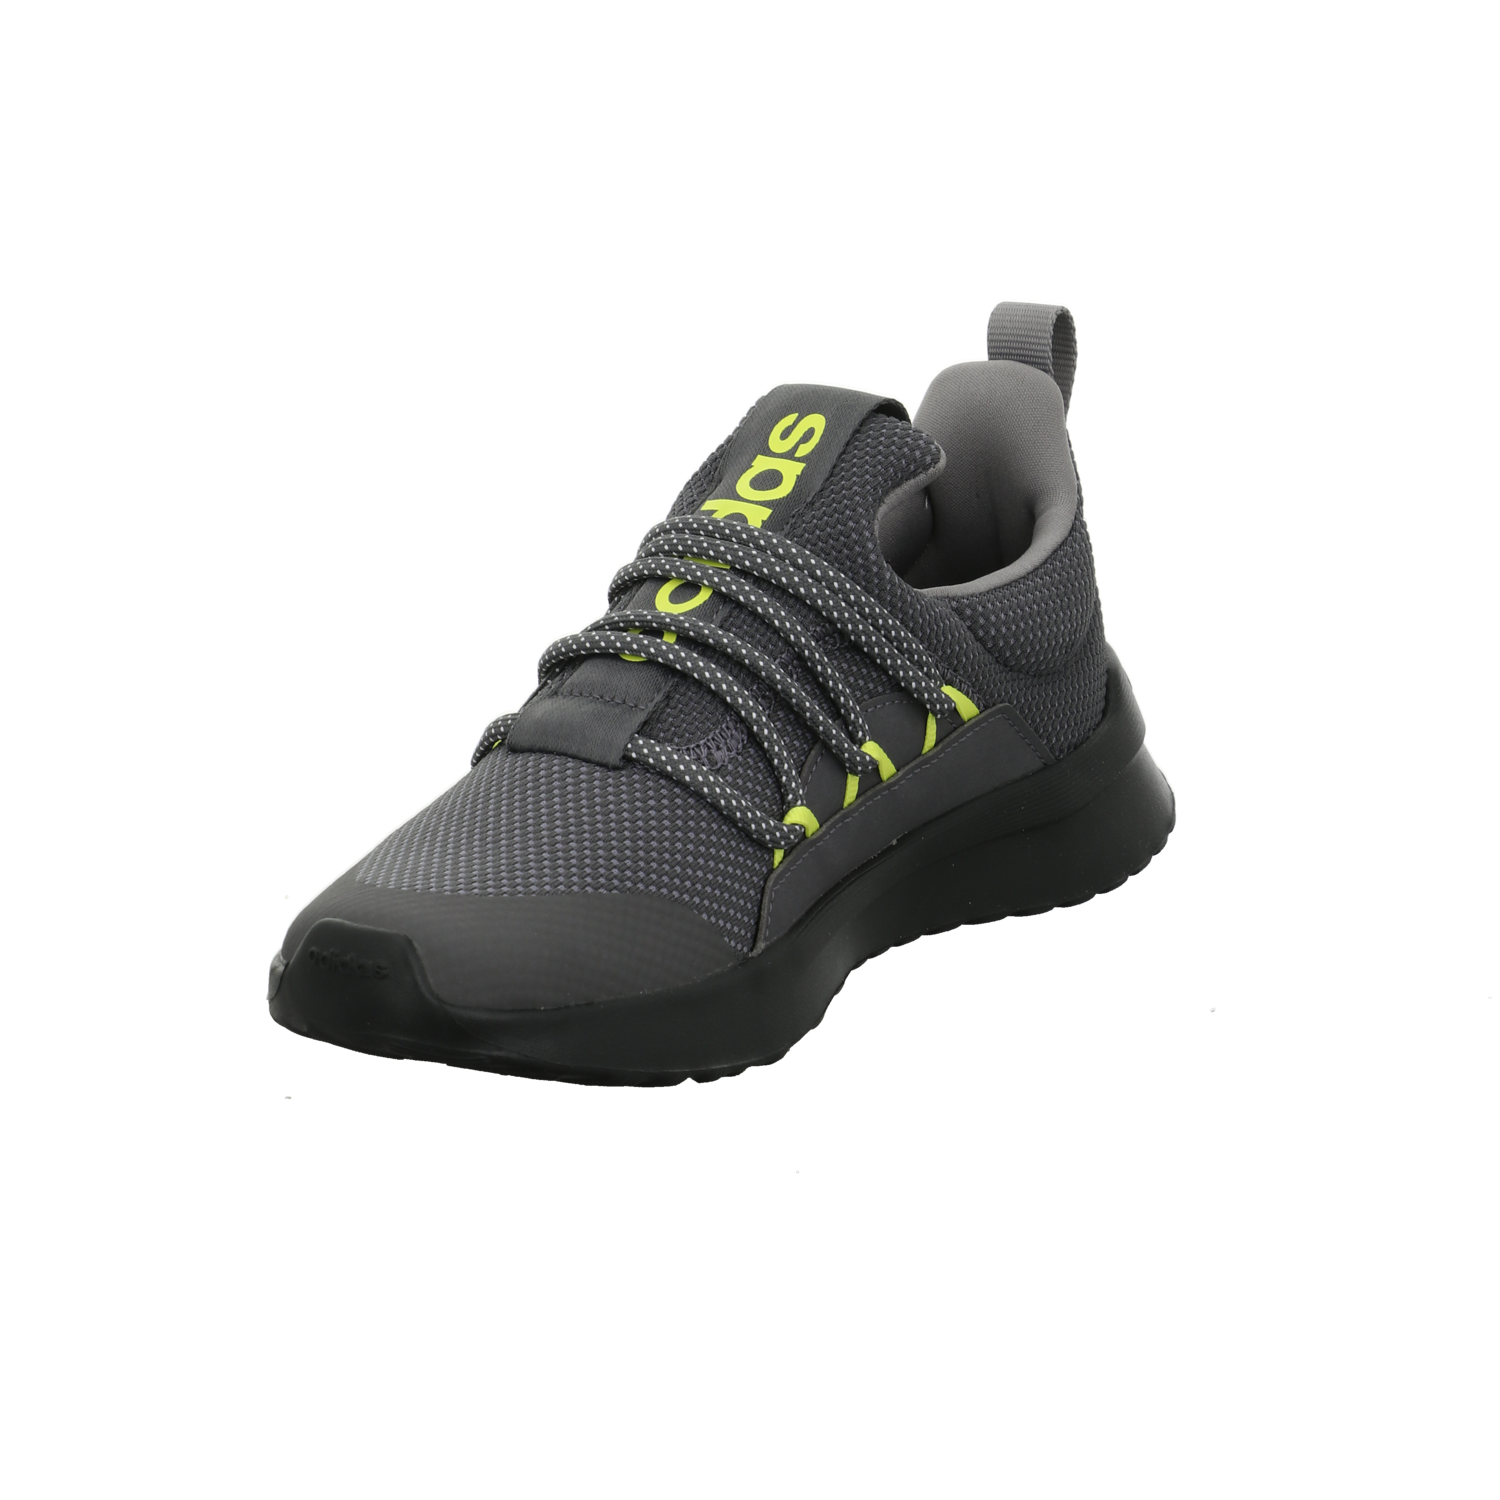 Adidas Sneaker K grau / dunkel-grau